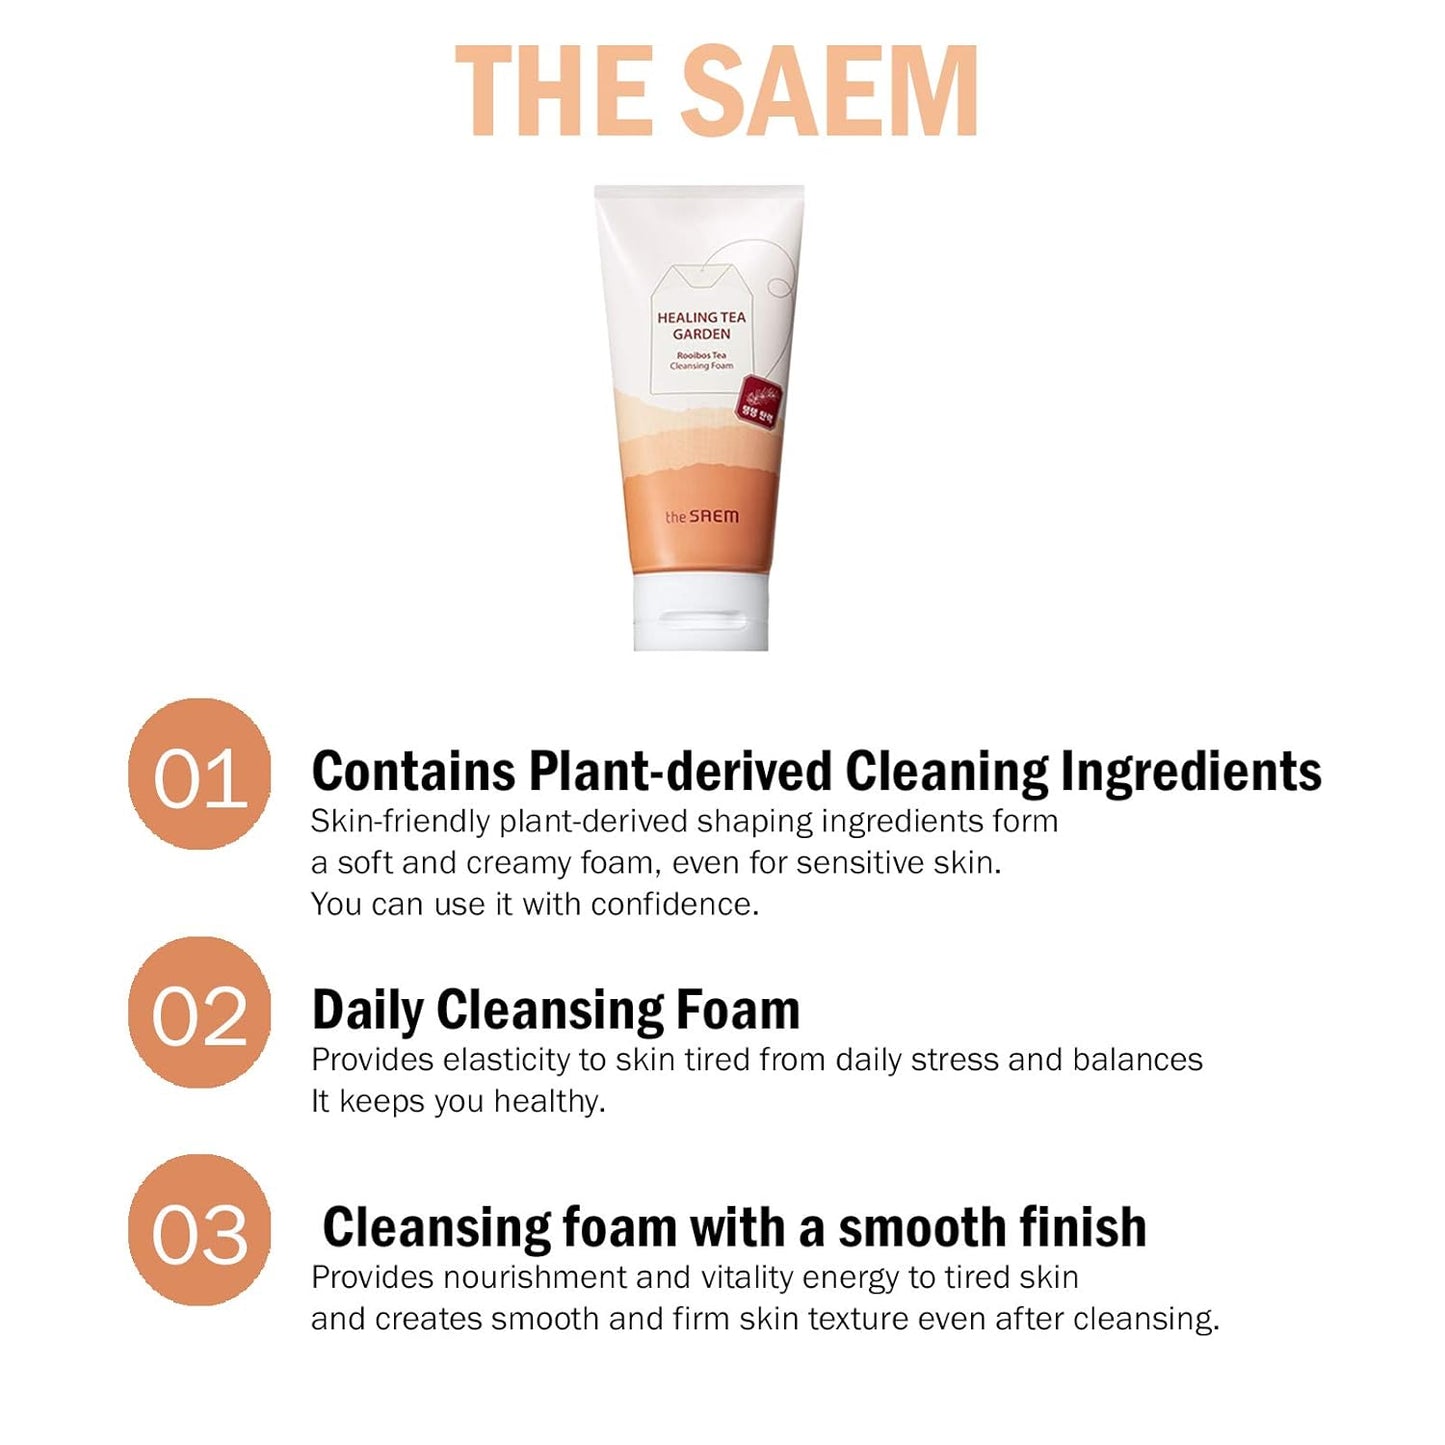 Korean Cosmetic The Saem Healing Tea Garden Cleansing Foam 150ml 4 Types Skin care